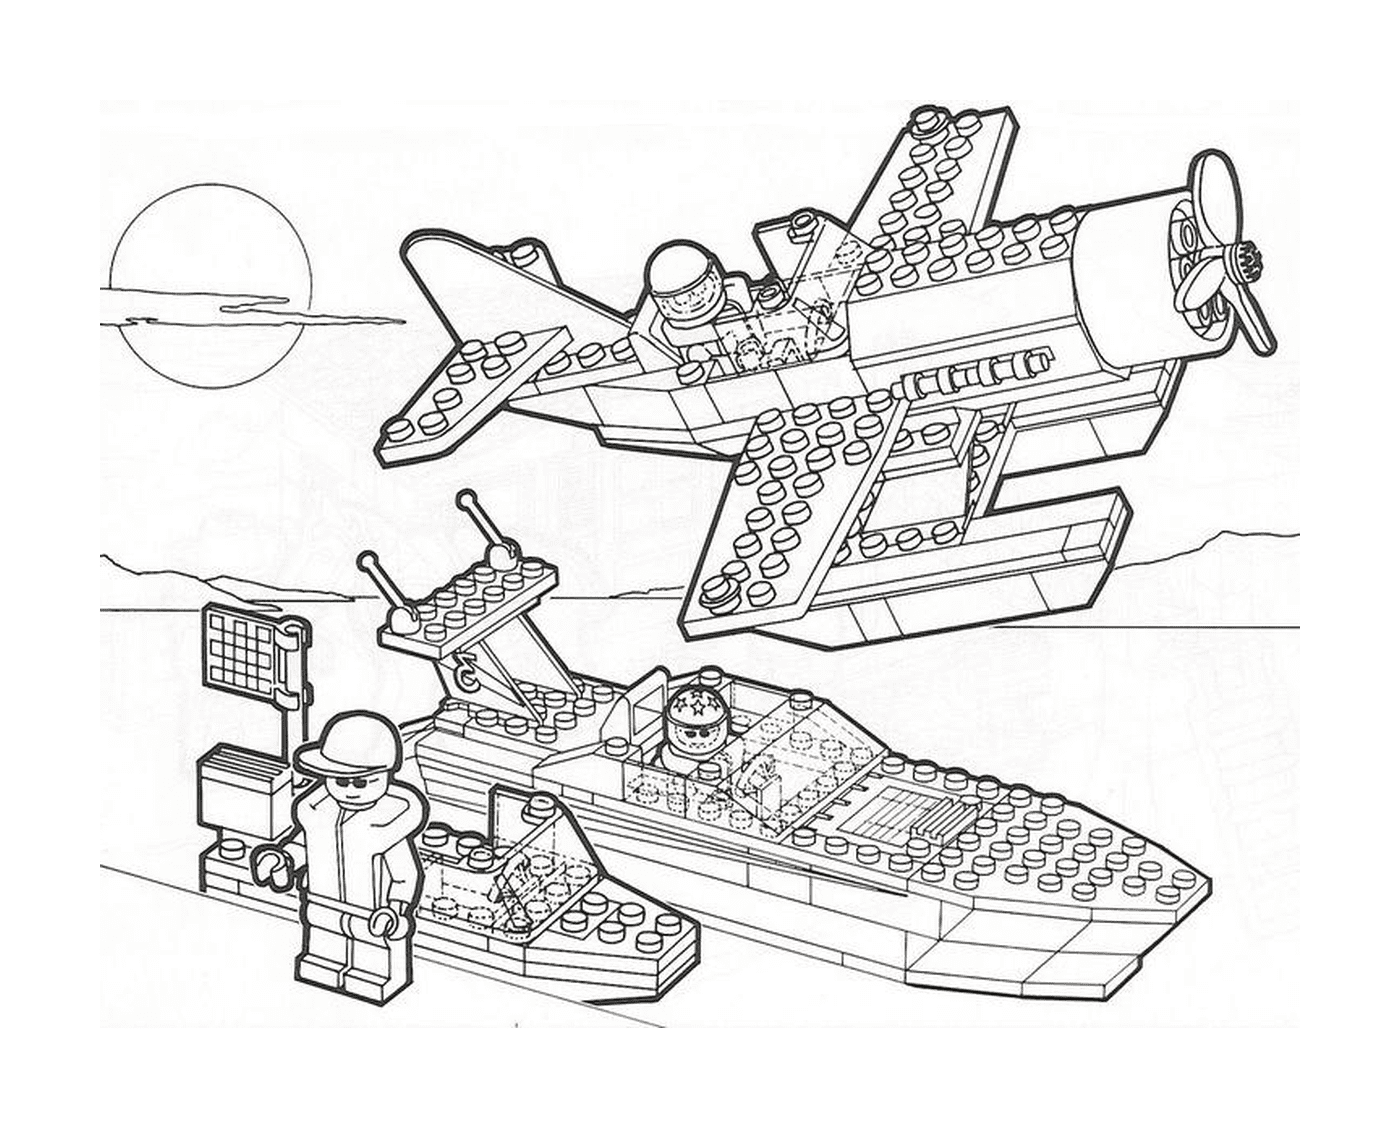  Sottomarino Lego e barca avventurosa 